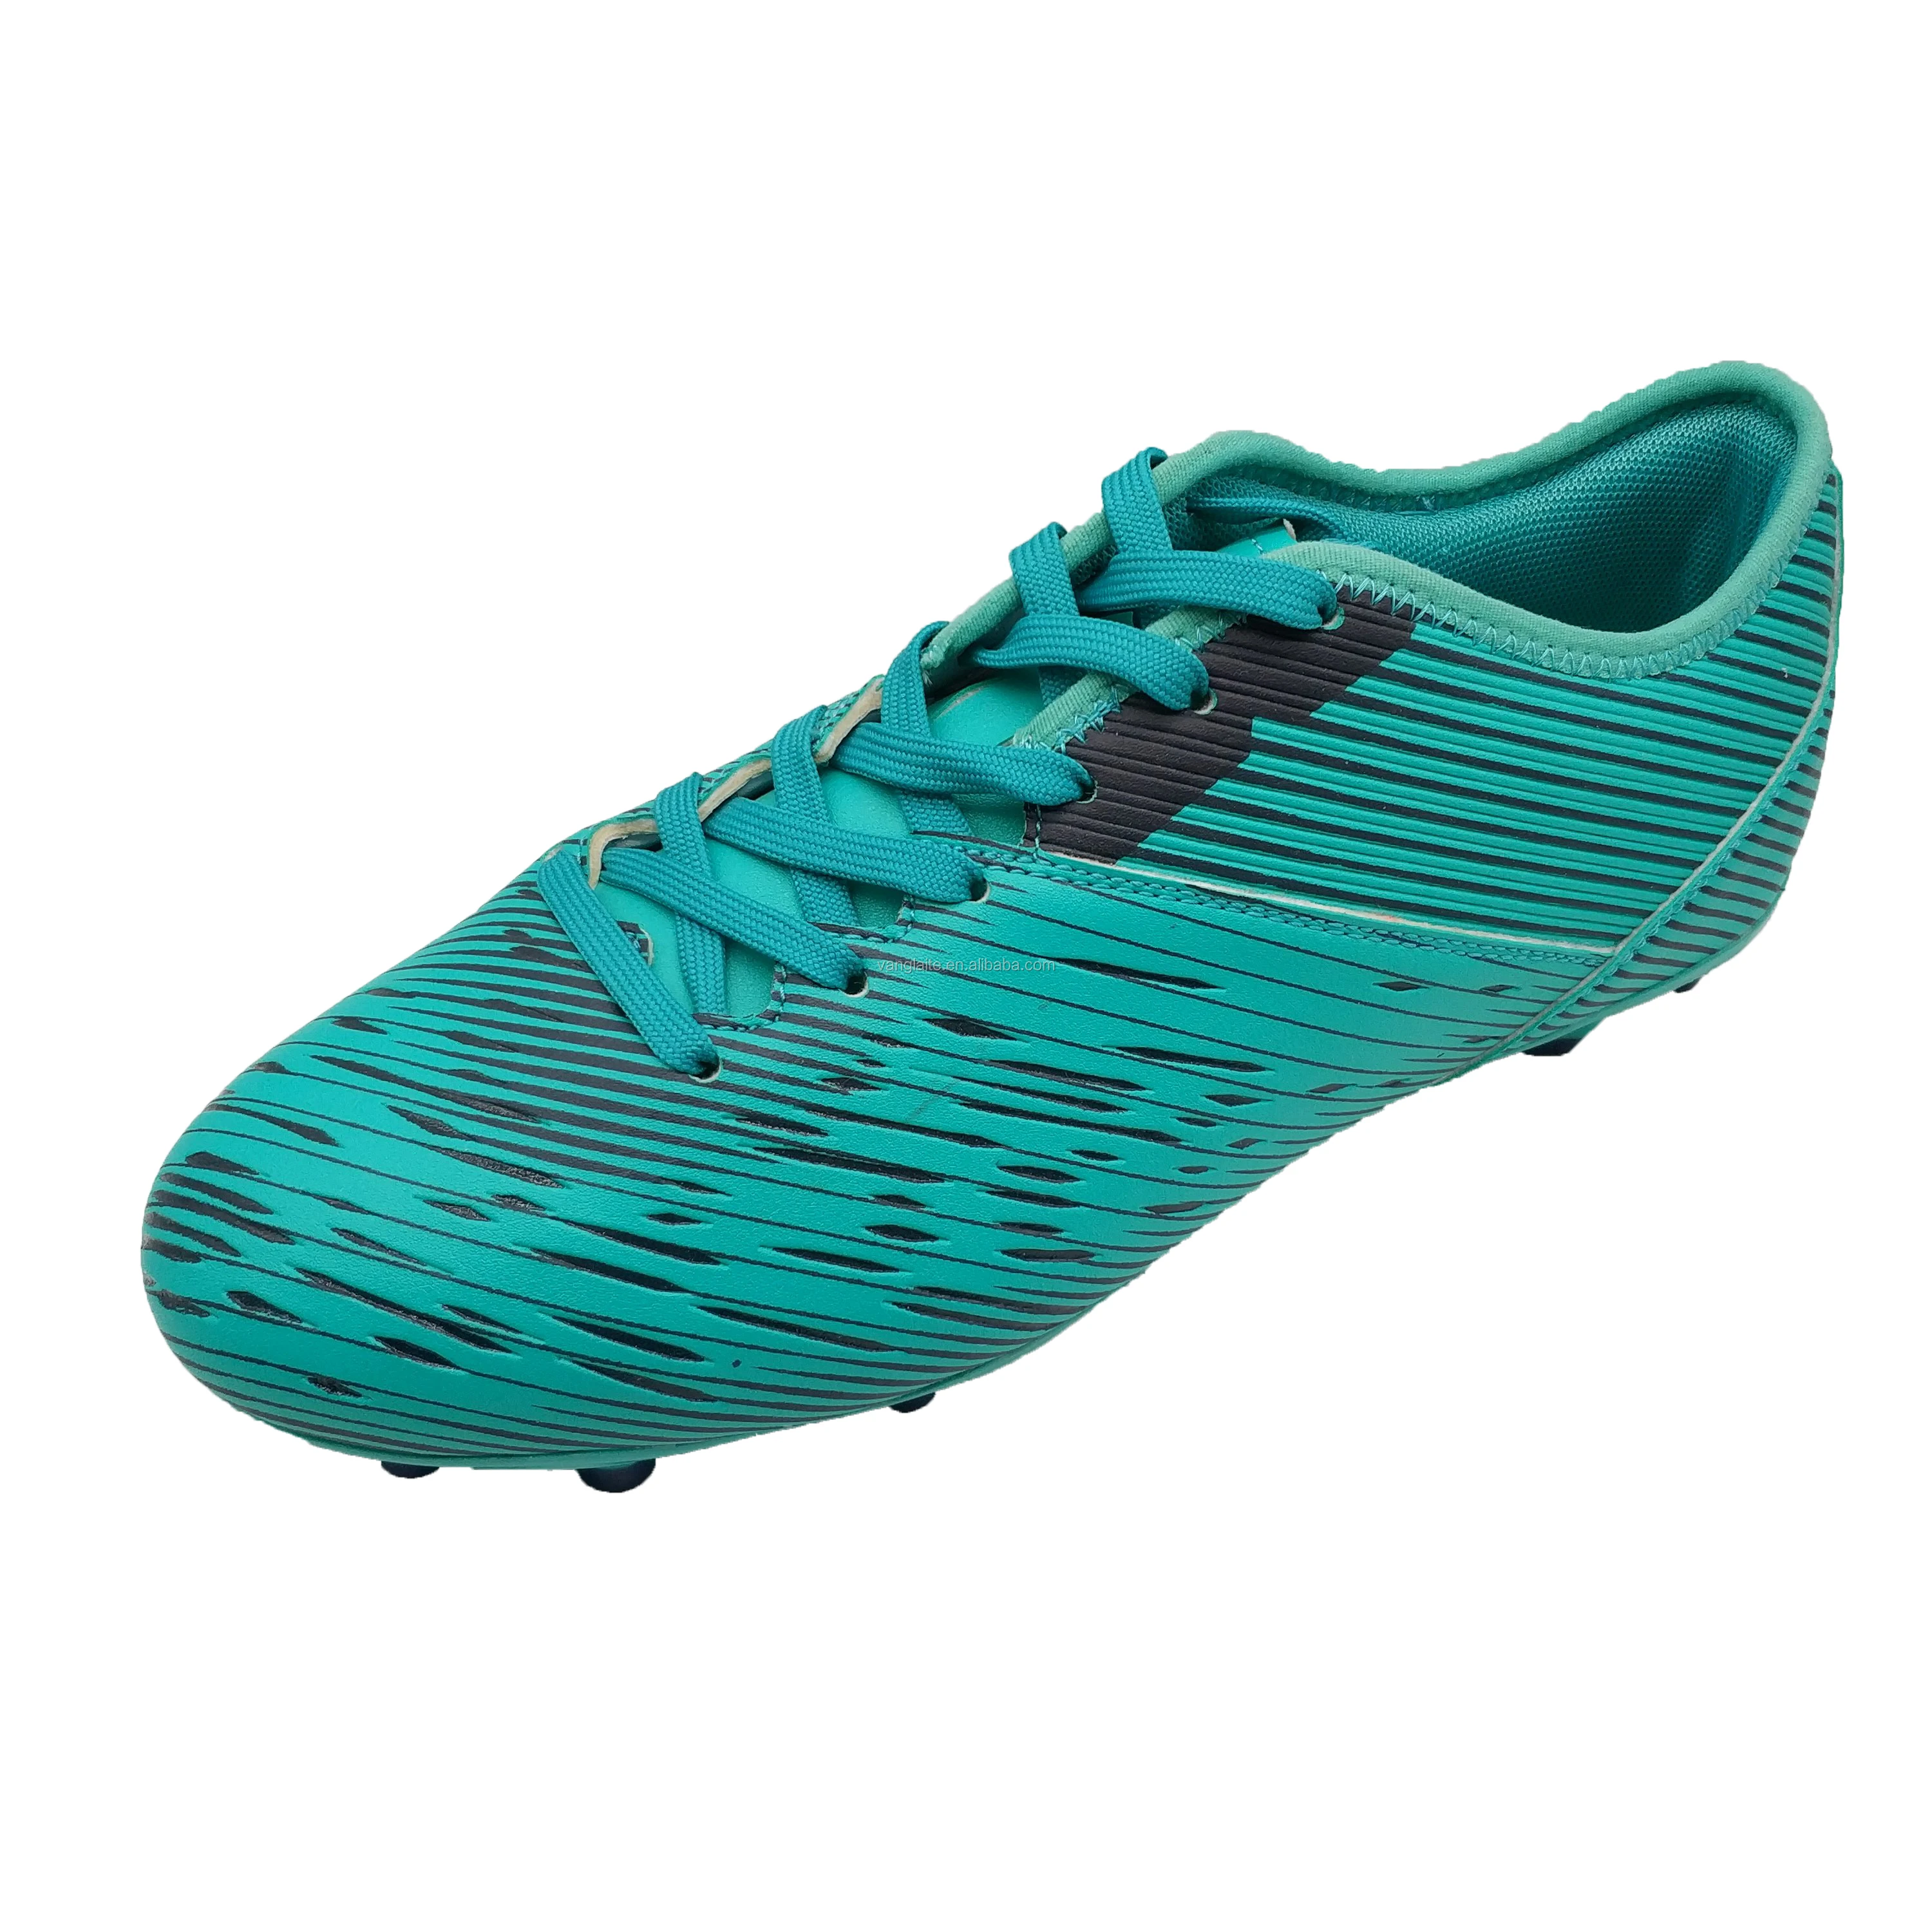 Factory Modern Design Soccer Boots Indoor Football Shoes For Men